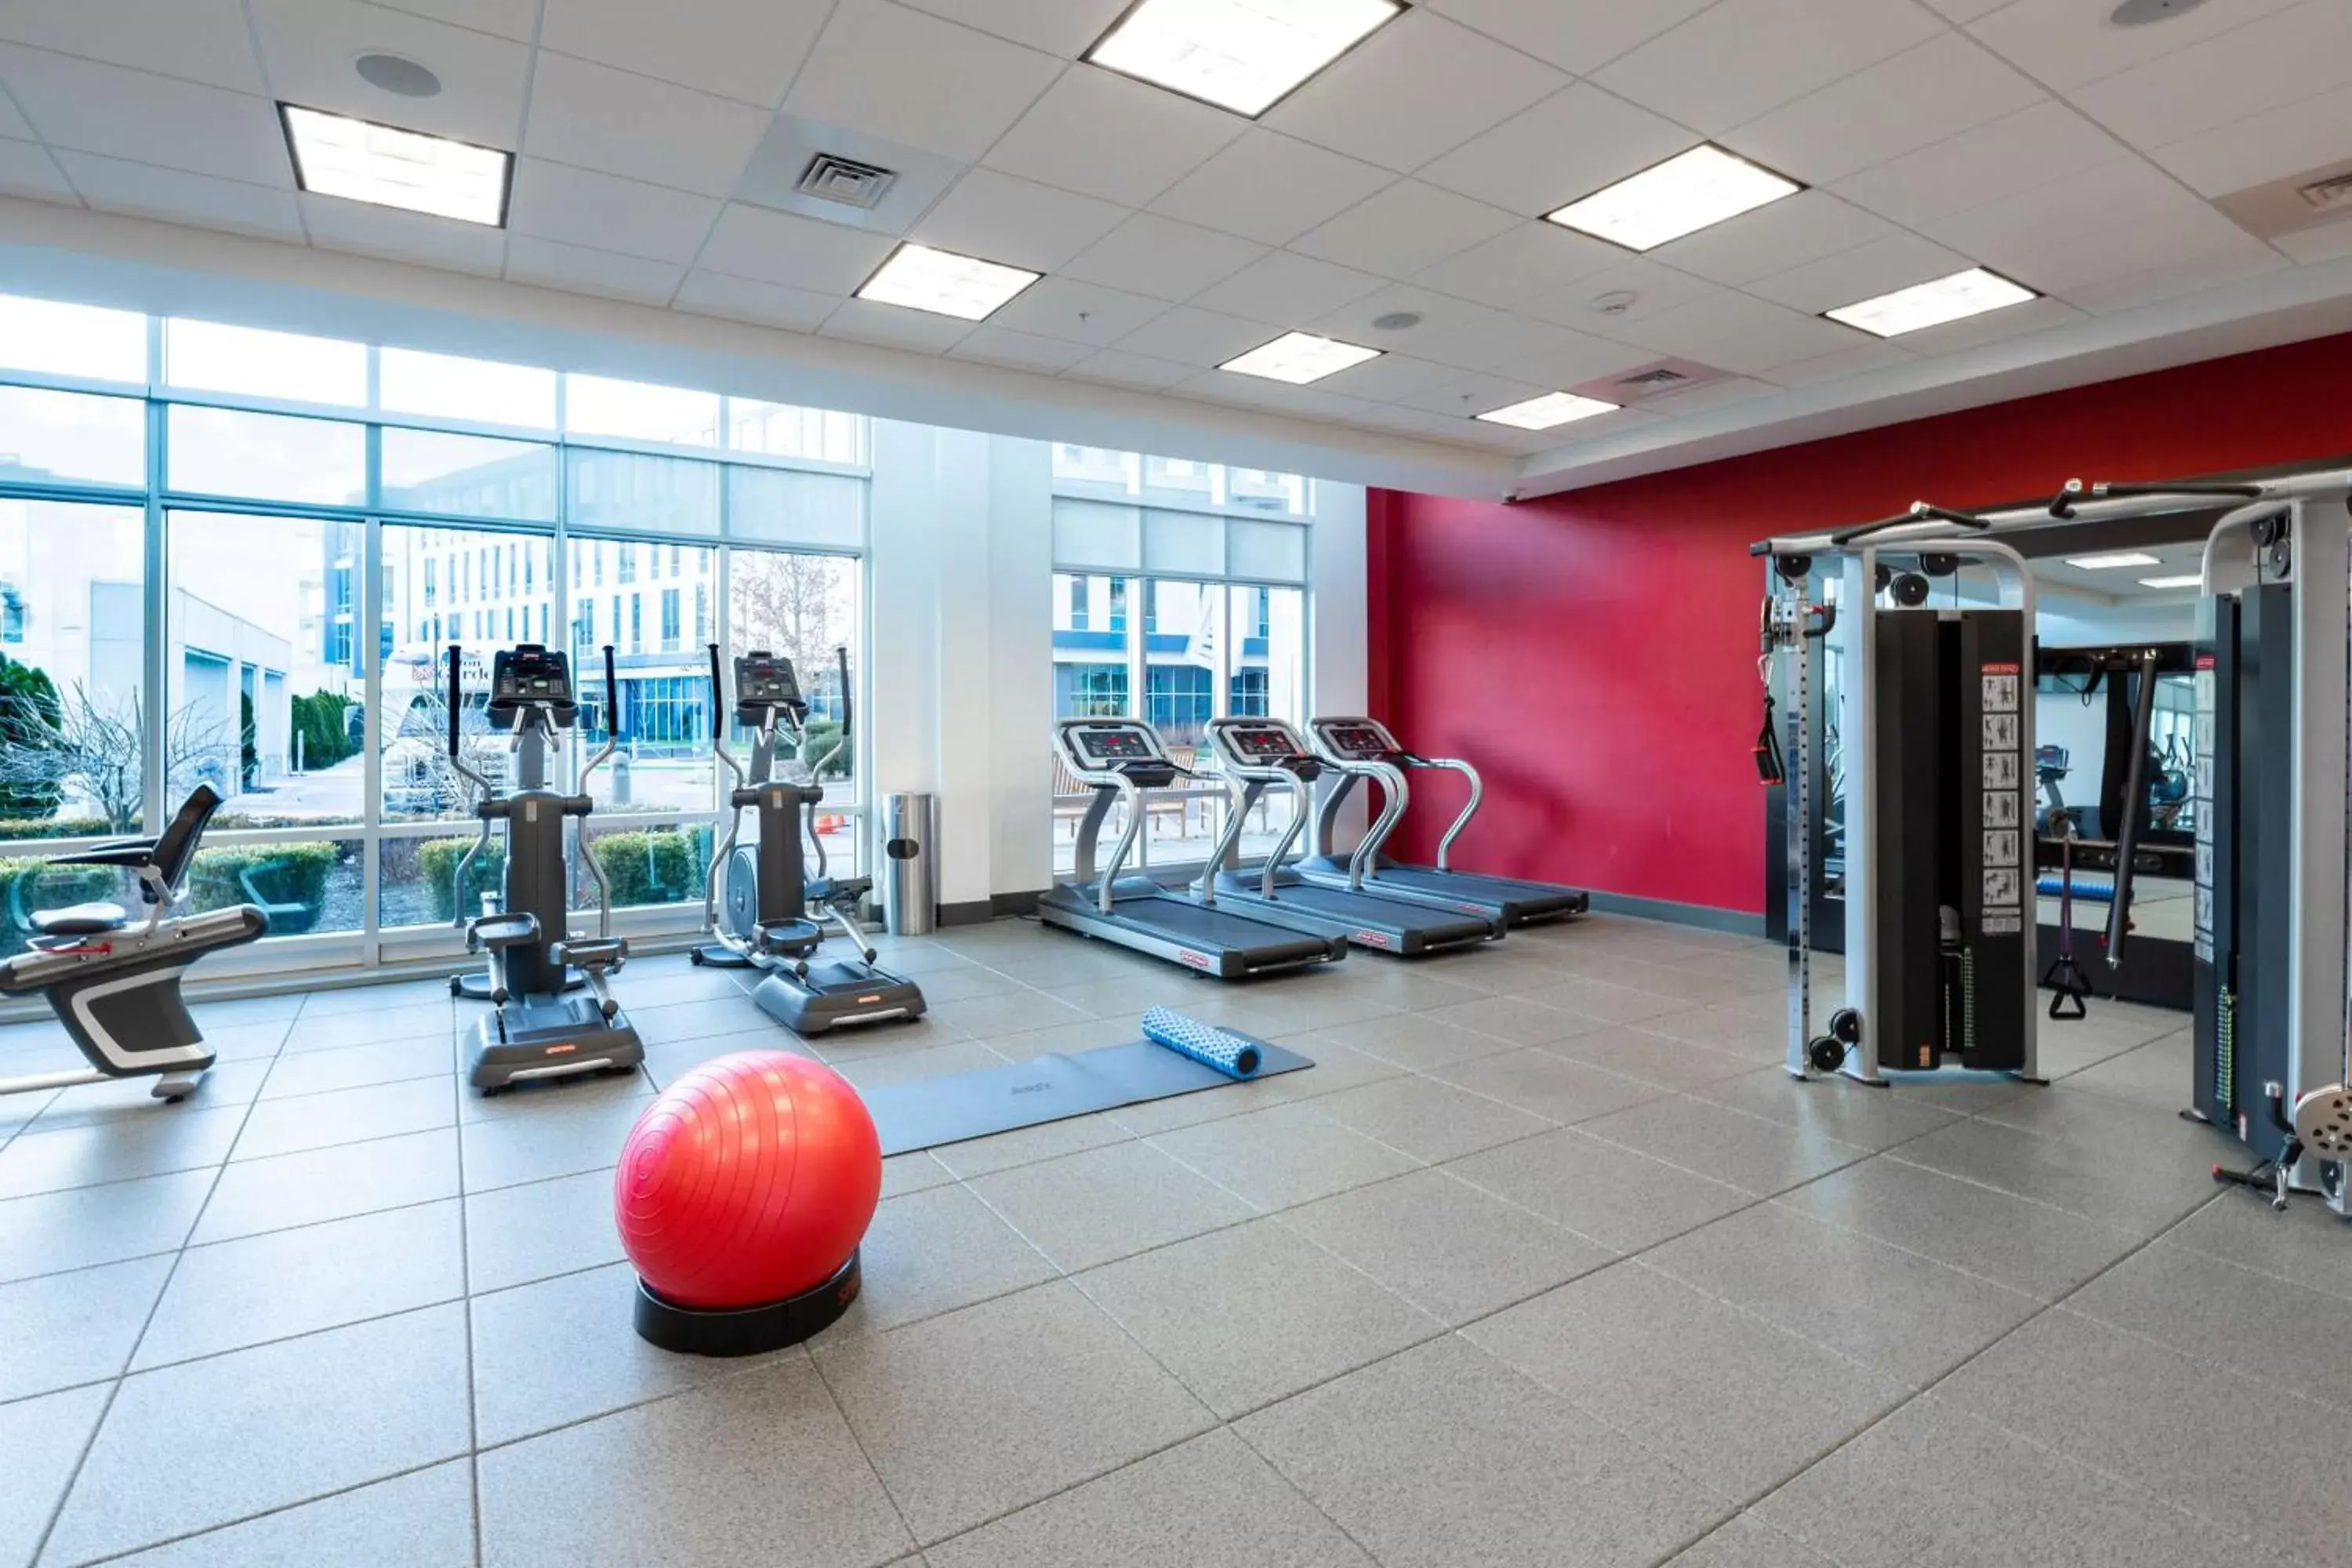 Fitness centre/facilities, Fitness Center/Facilities in Hilton Garden Inn Asheville Downtown